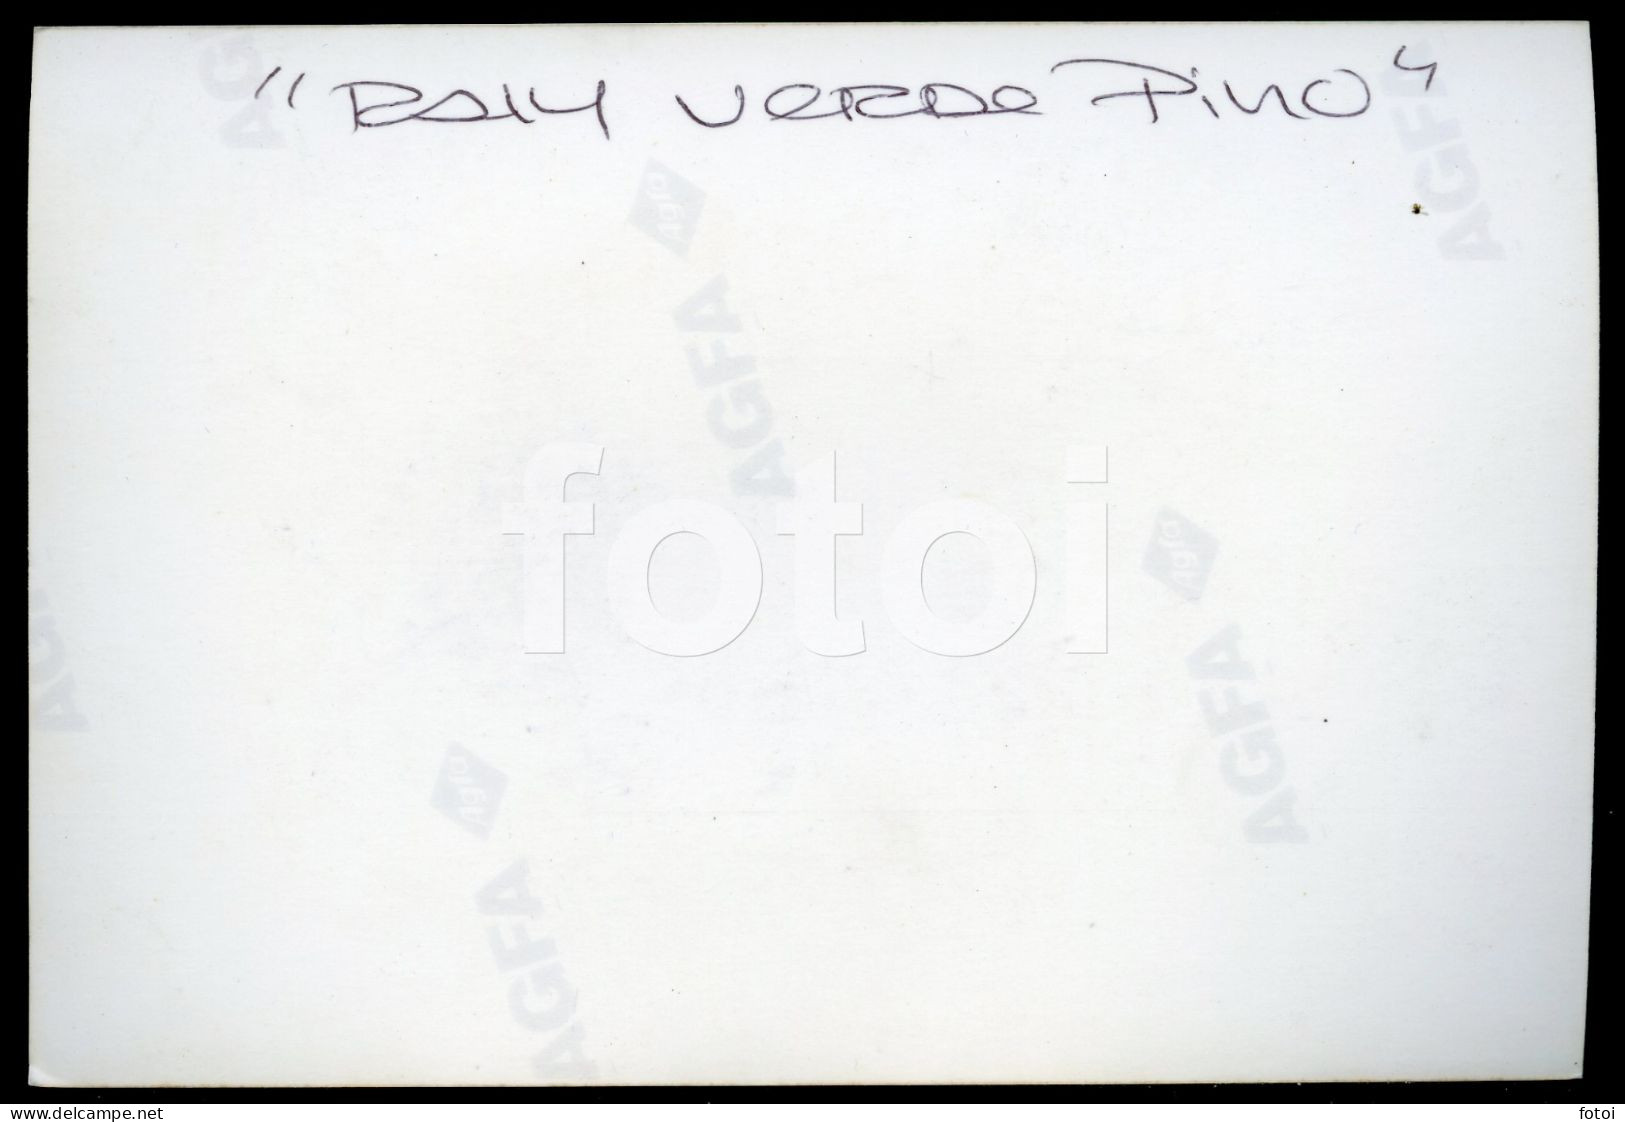 1990s ORIGINAL PHOTO RALLYE RALLY RALI VERDE PINO RACING CAR FORD ESCORT MKI COSWORTH STAND ABRANTES - Automobiles